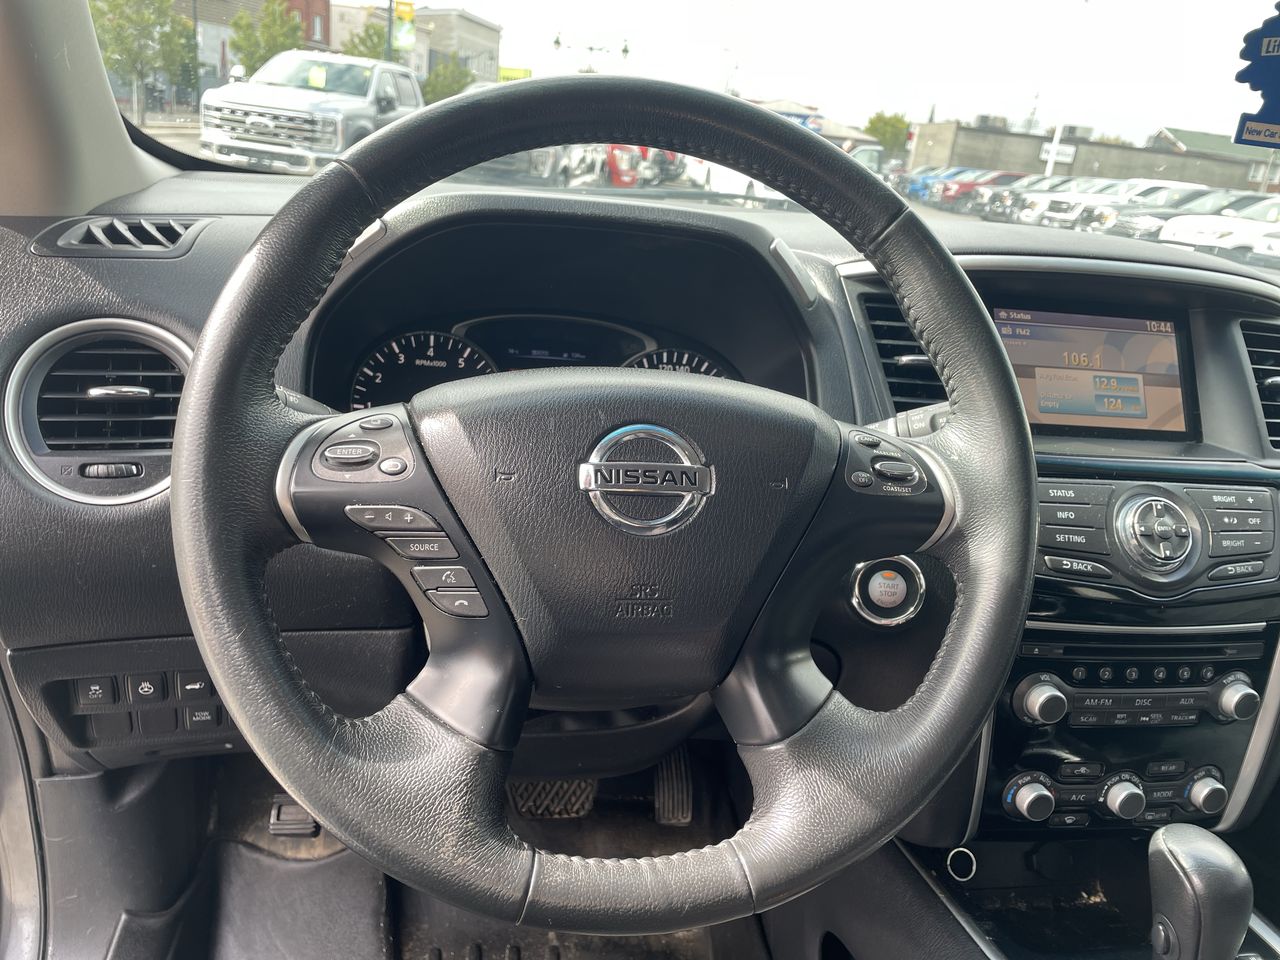 2015 Nissan Pathfinder - 21221B Full Image 14